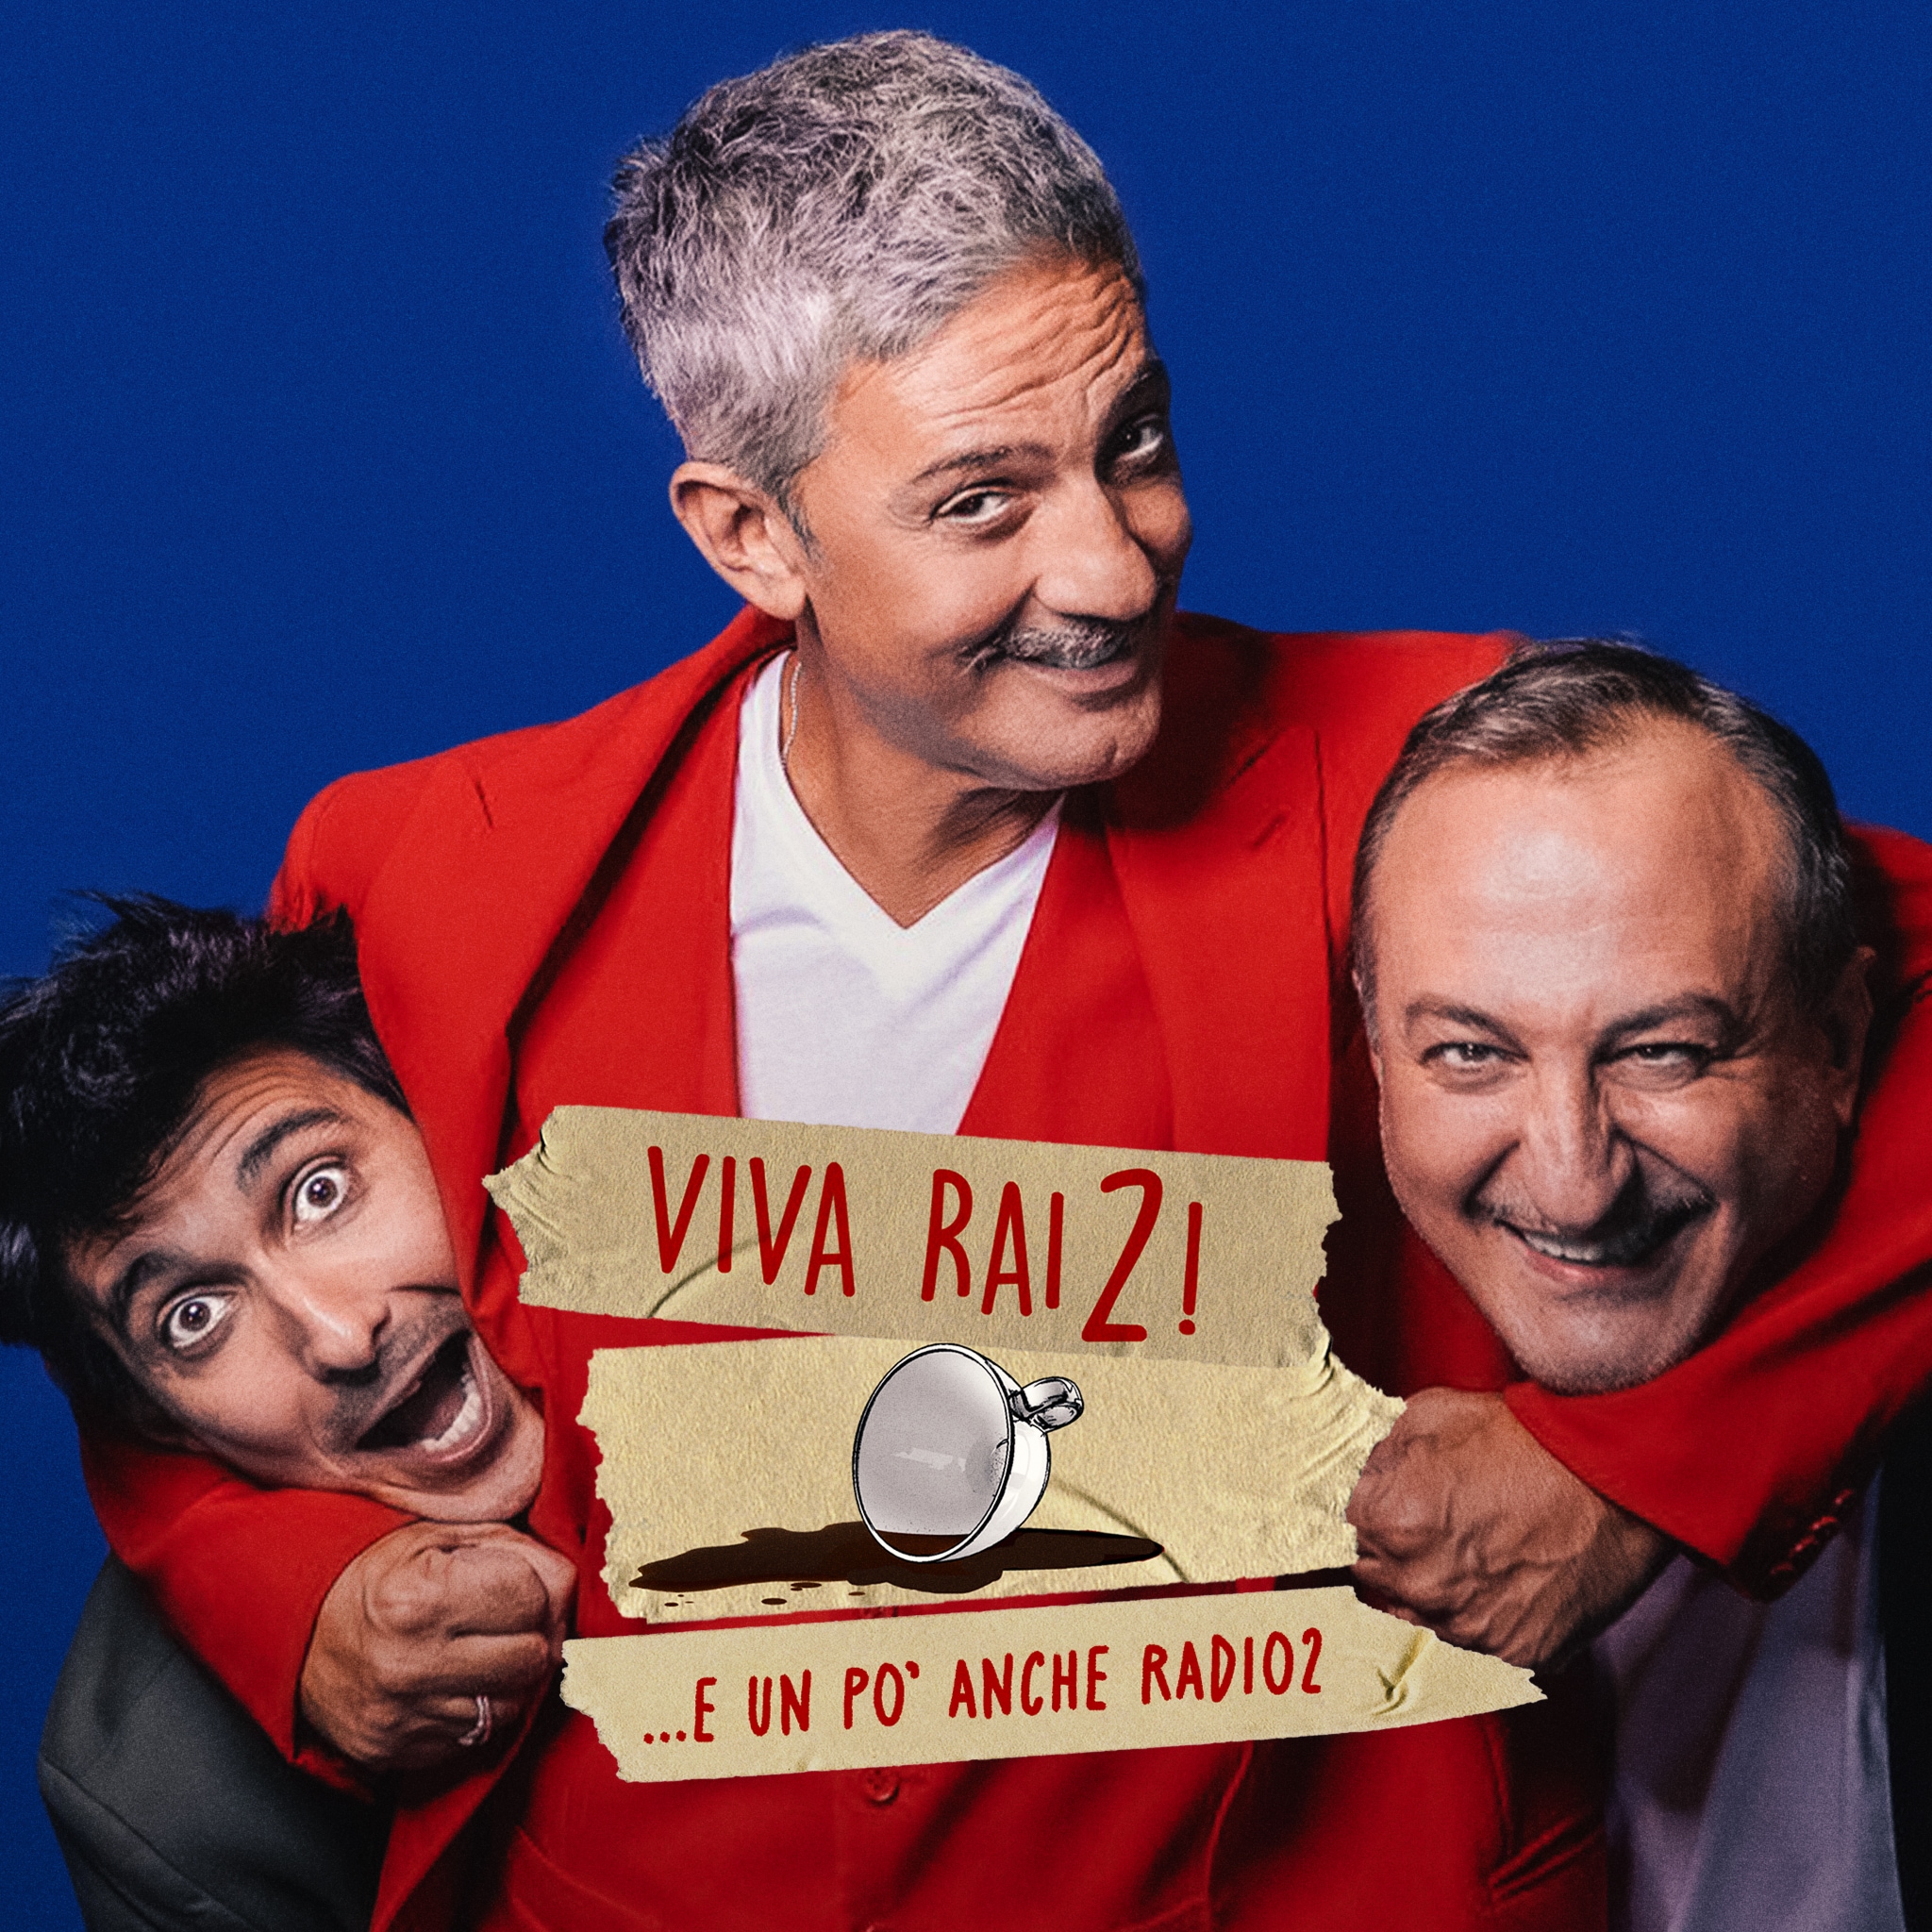 Rai Radio 2 Viva Rai2! E Un Po' Anche Radio2